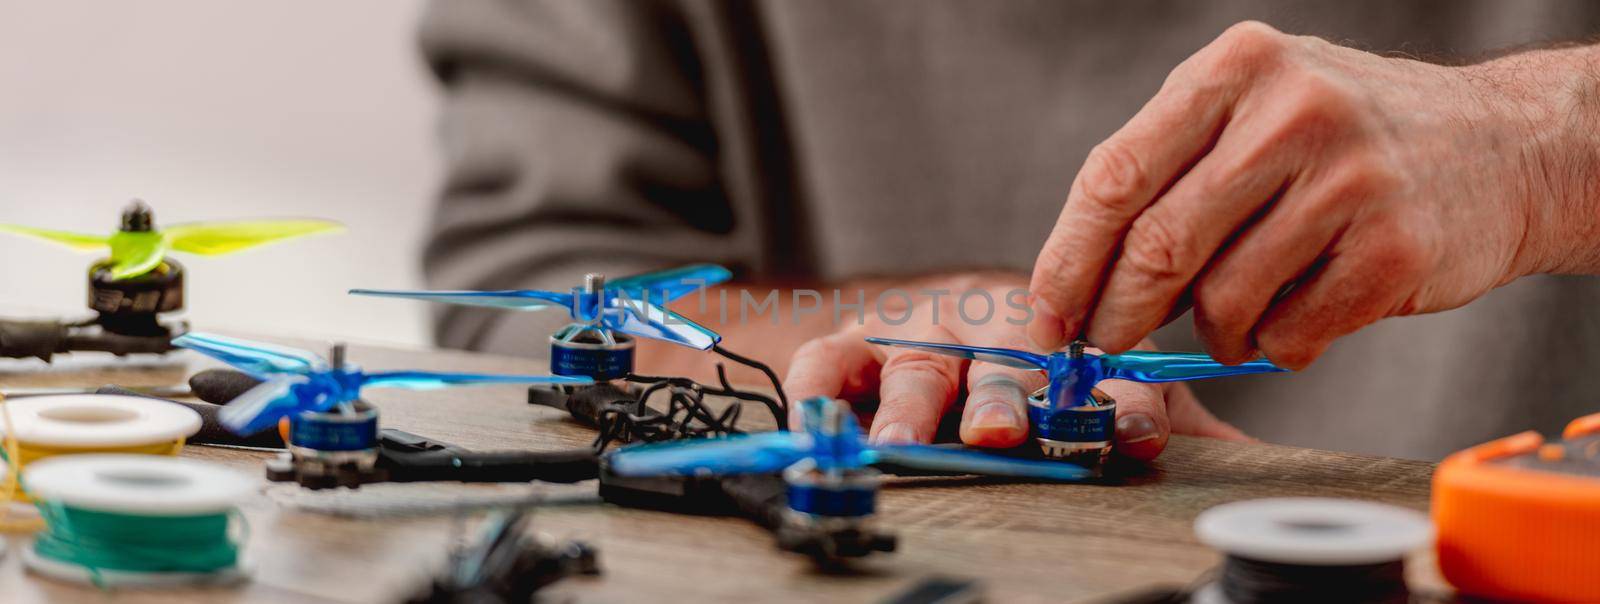 Quadcopter repairing process by tan4ikk1